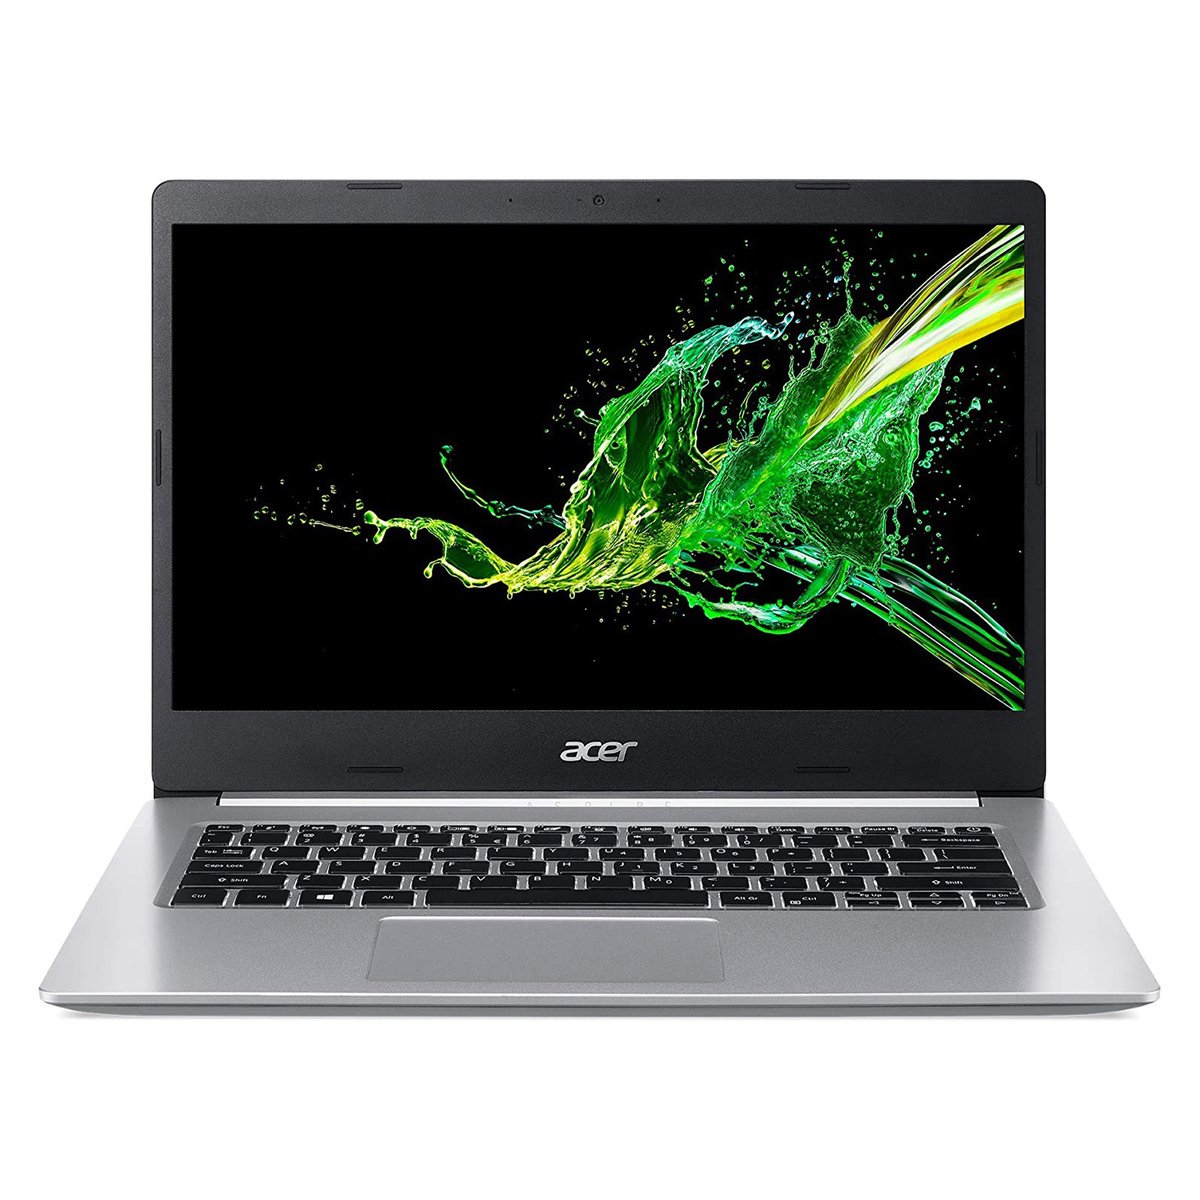 Acer Notebook Aspire 5 NX.HUPEM.007,Intel Core i3-1005G1,256GB SSD,4GB RAM,14" FHD IPS,Windows 10,Silver